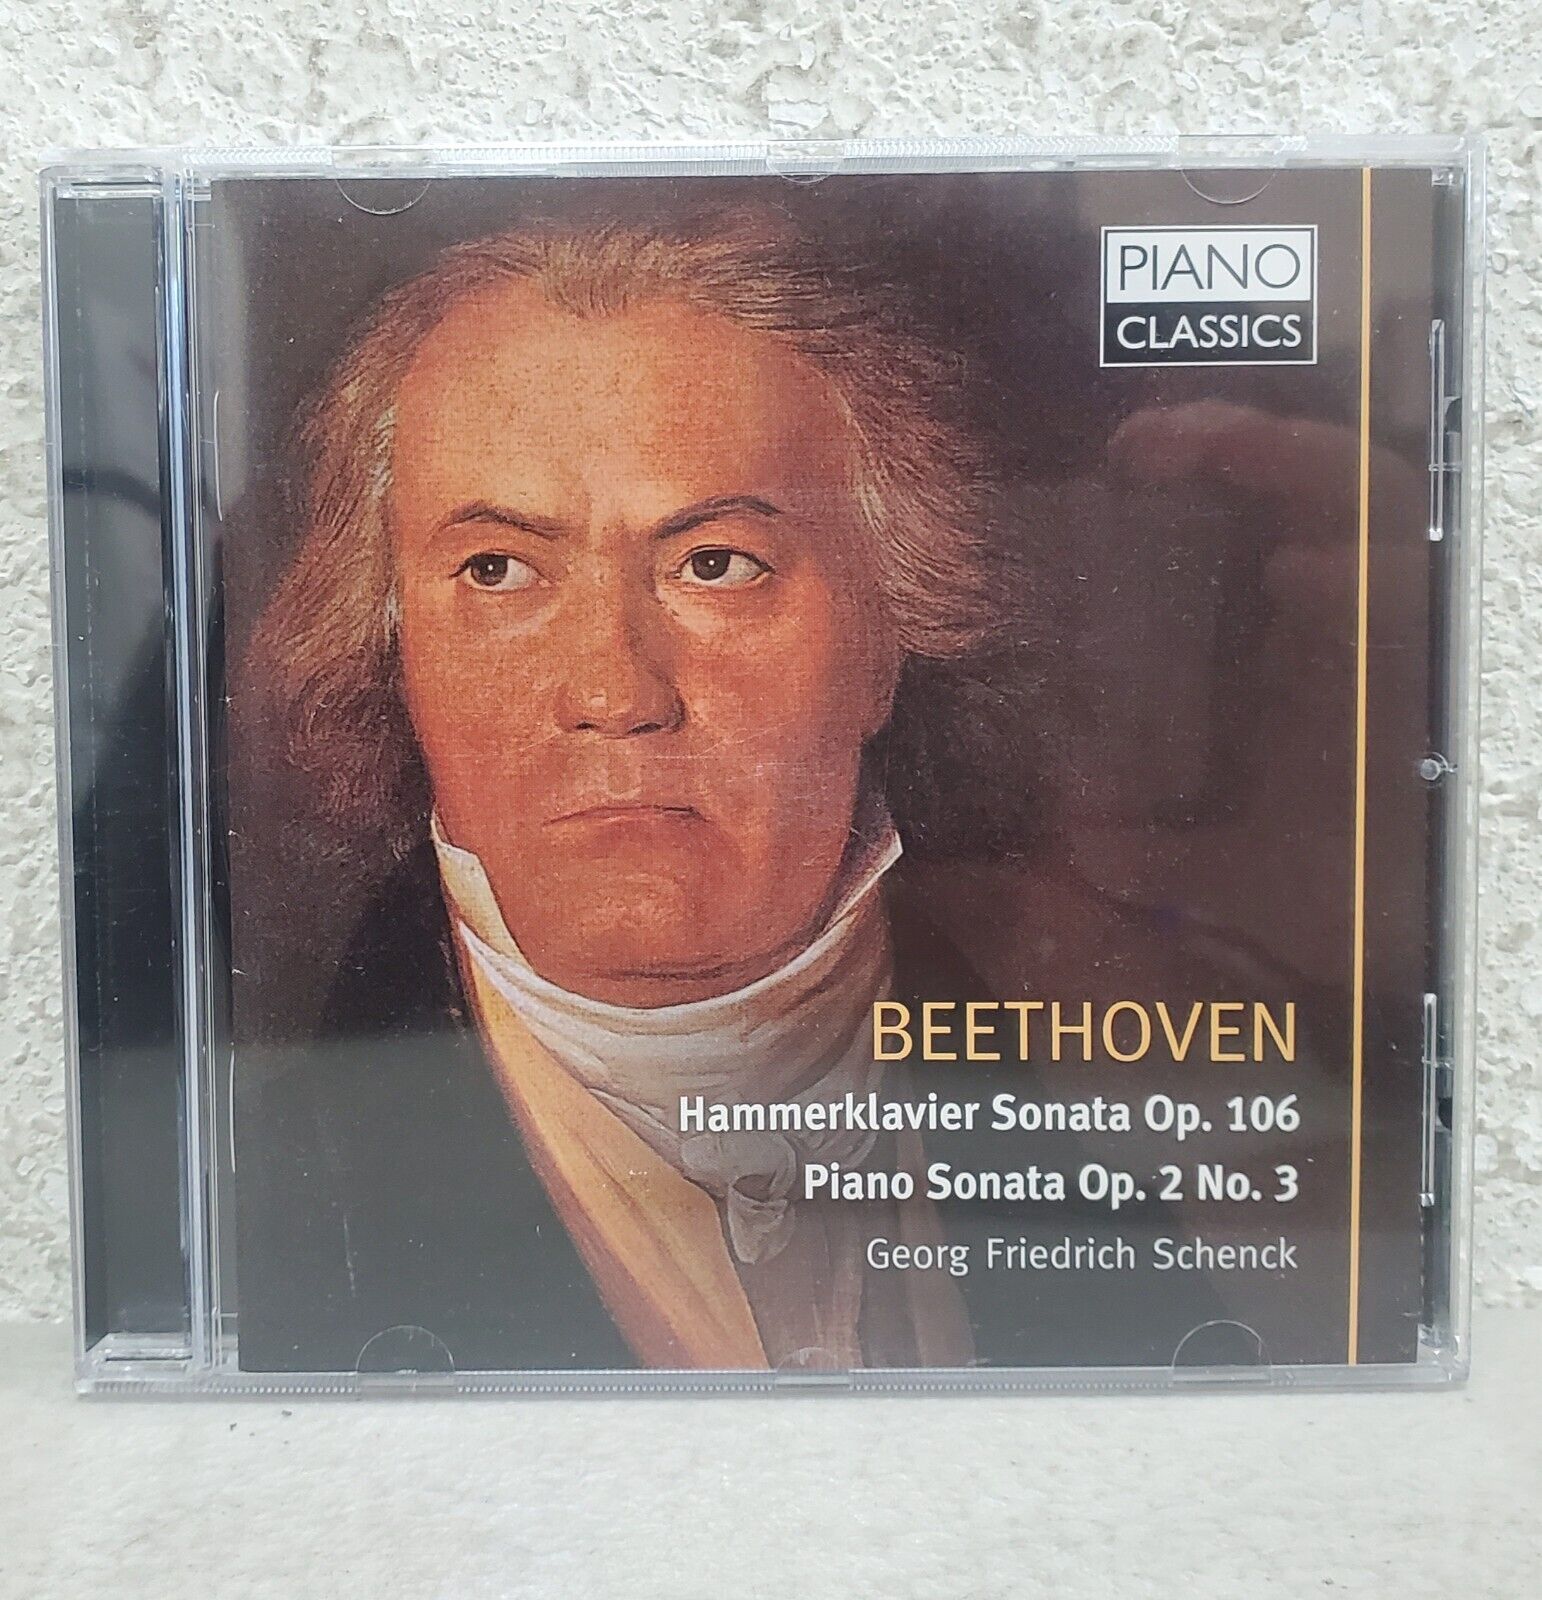 Beethoven Hammerklavier Sonata Op. 106 Piano Sonata Op. 2 No. 3 CD Schenck 2012